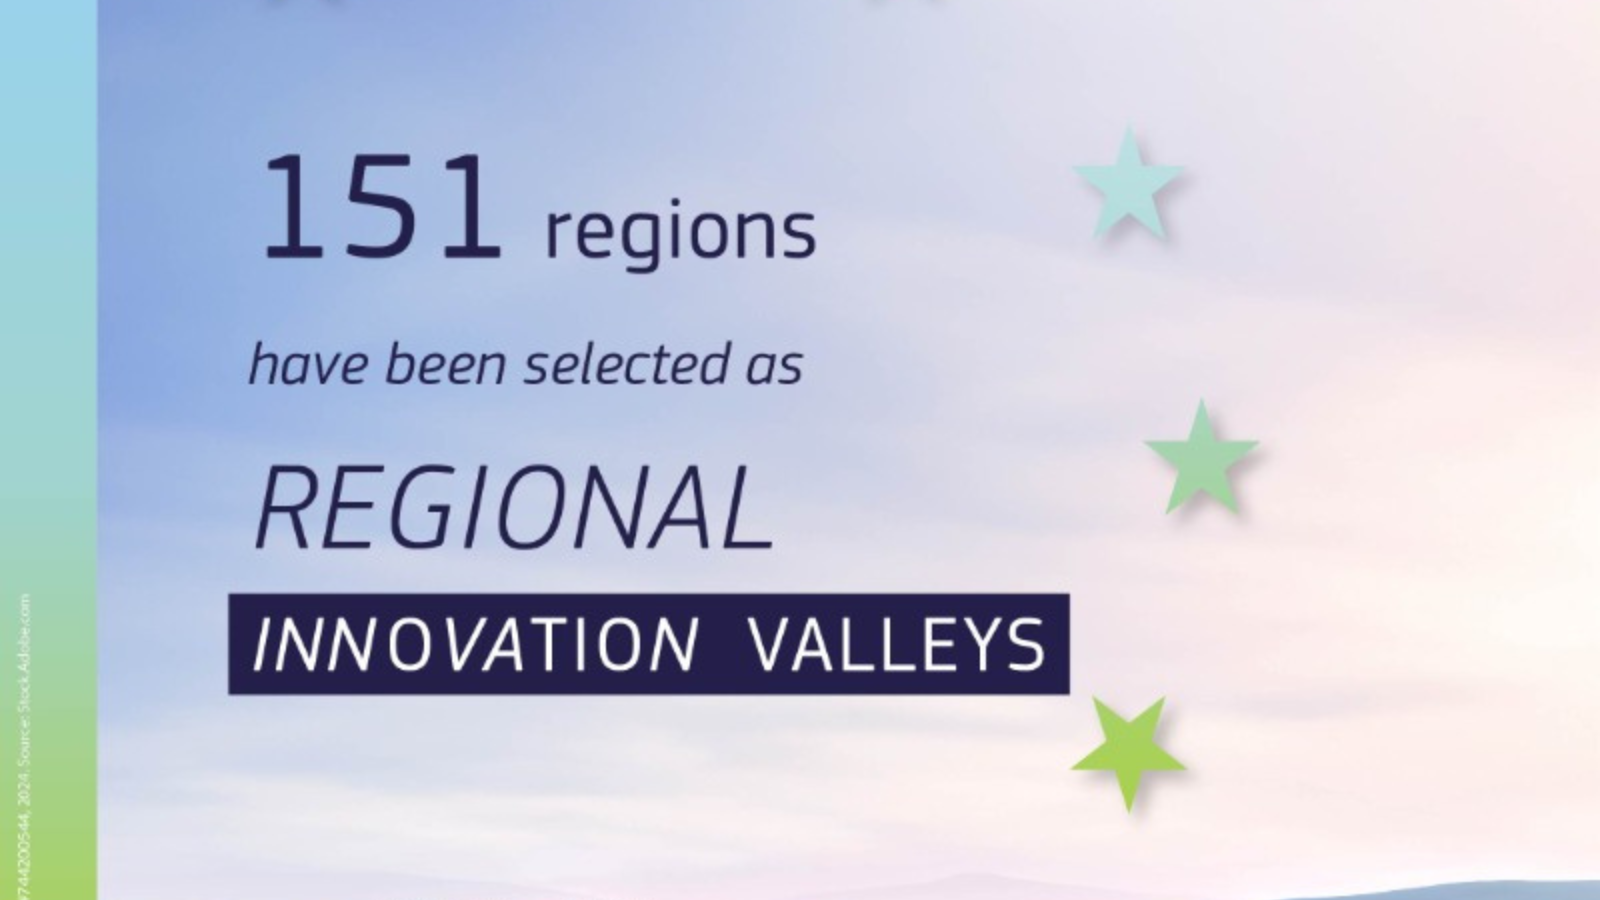 Over 70 ERRIN member regions among the Regional Innovation Valleys